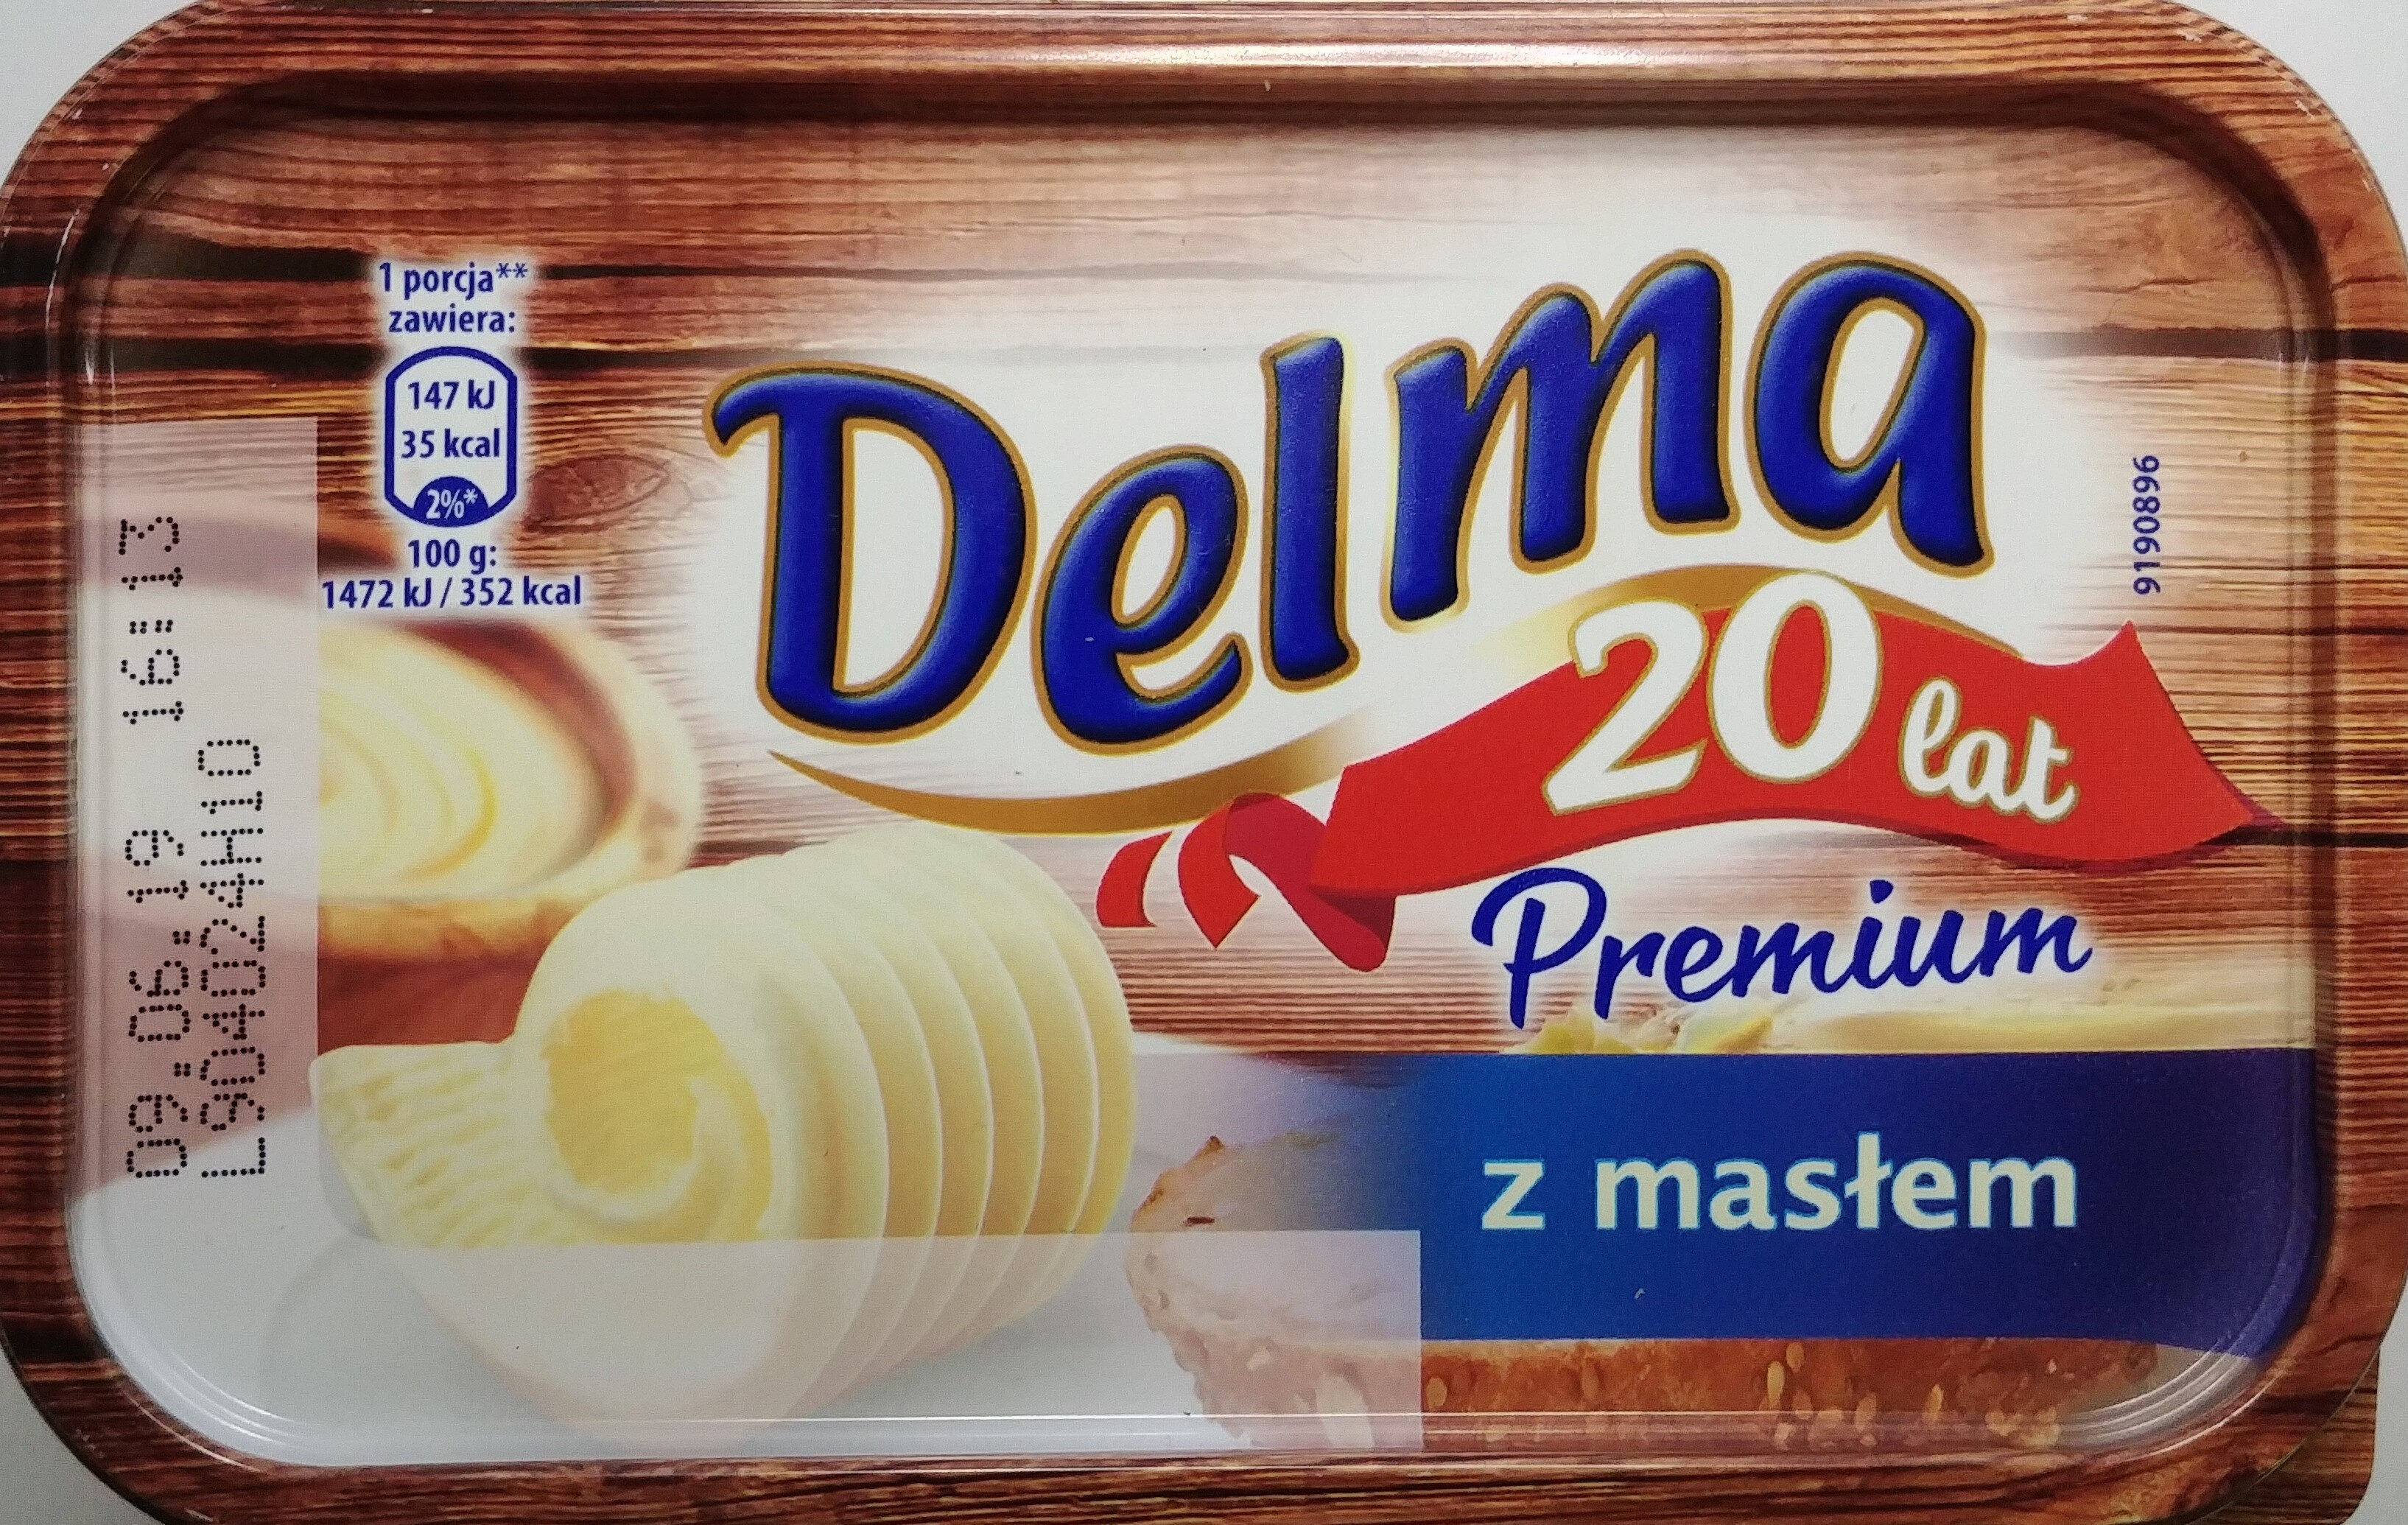 Premium z masłem - Product - pl